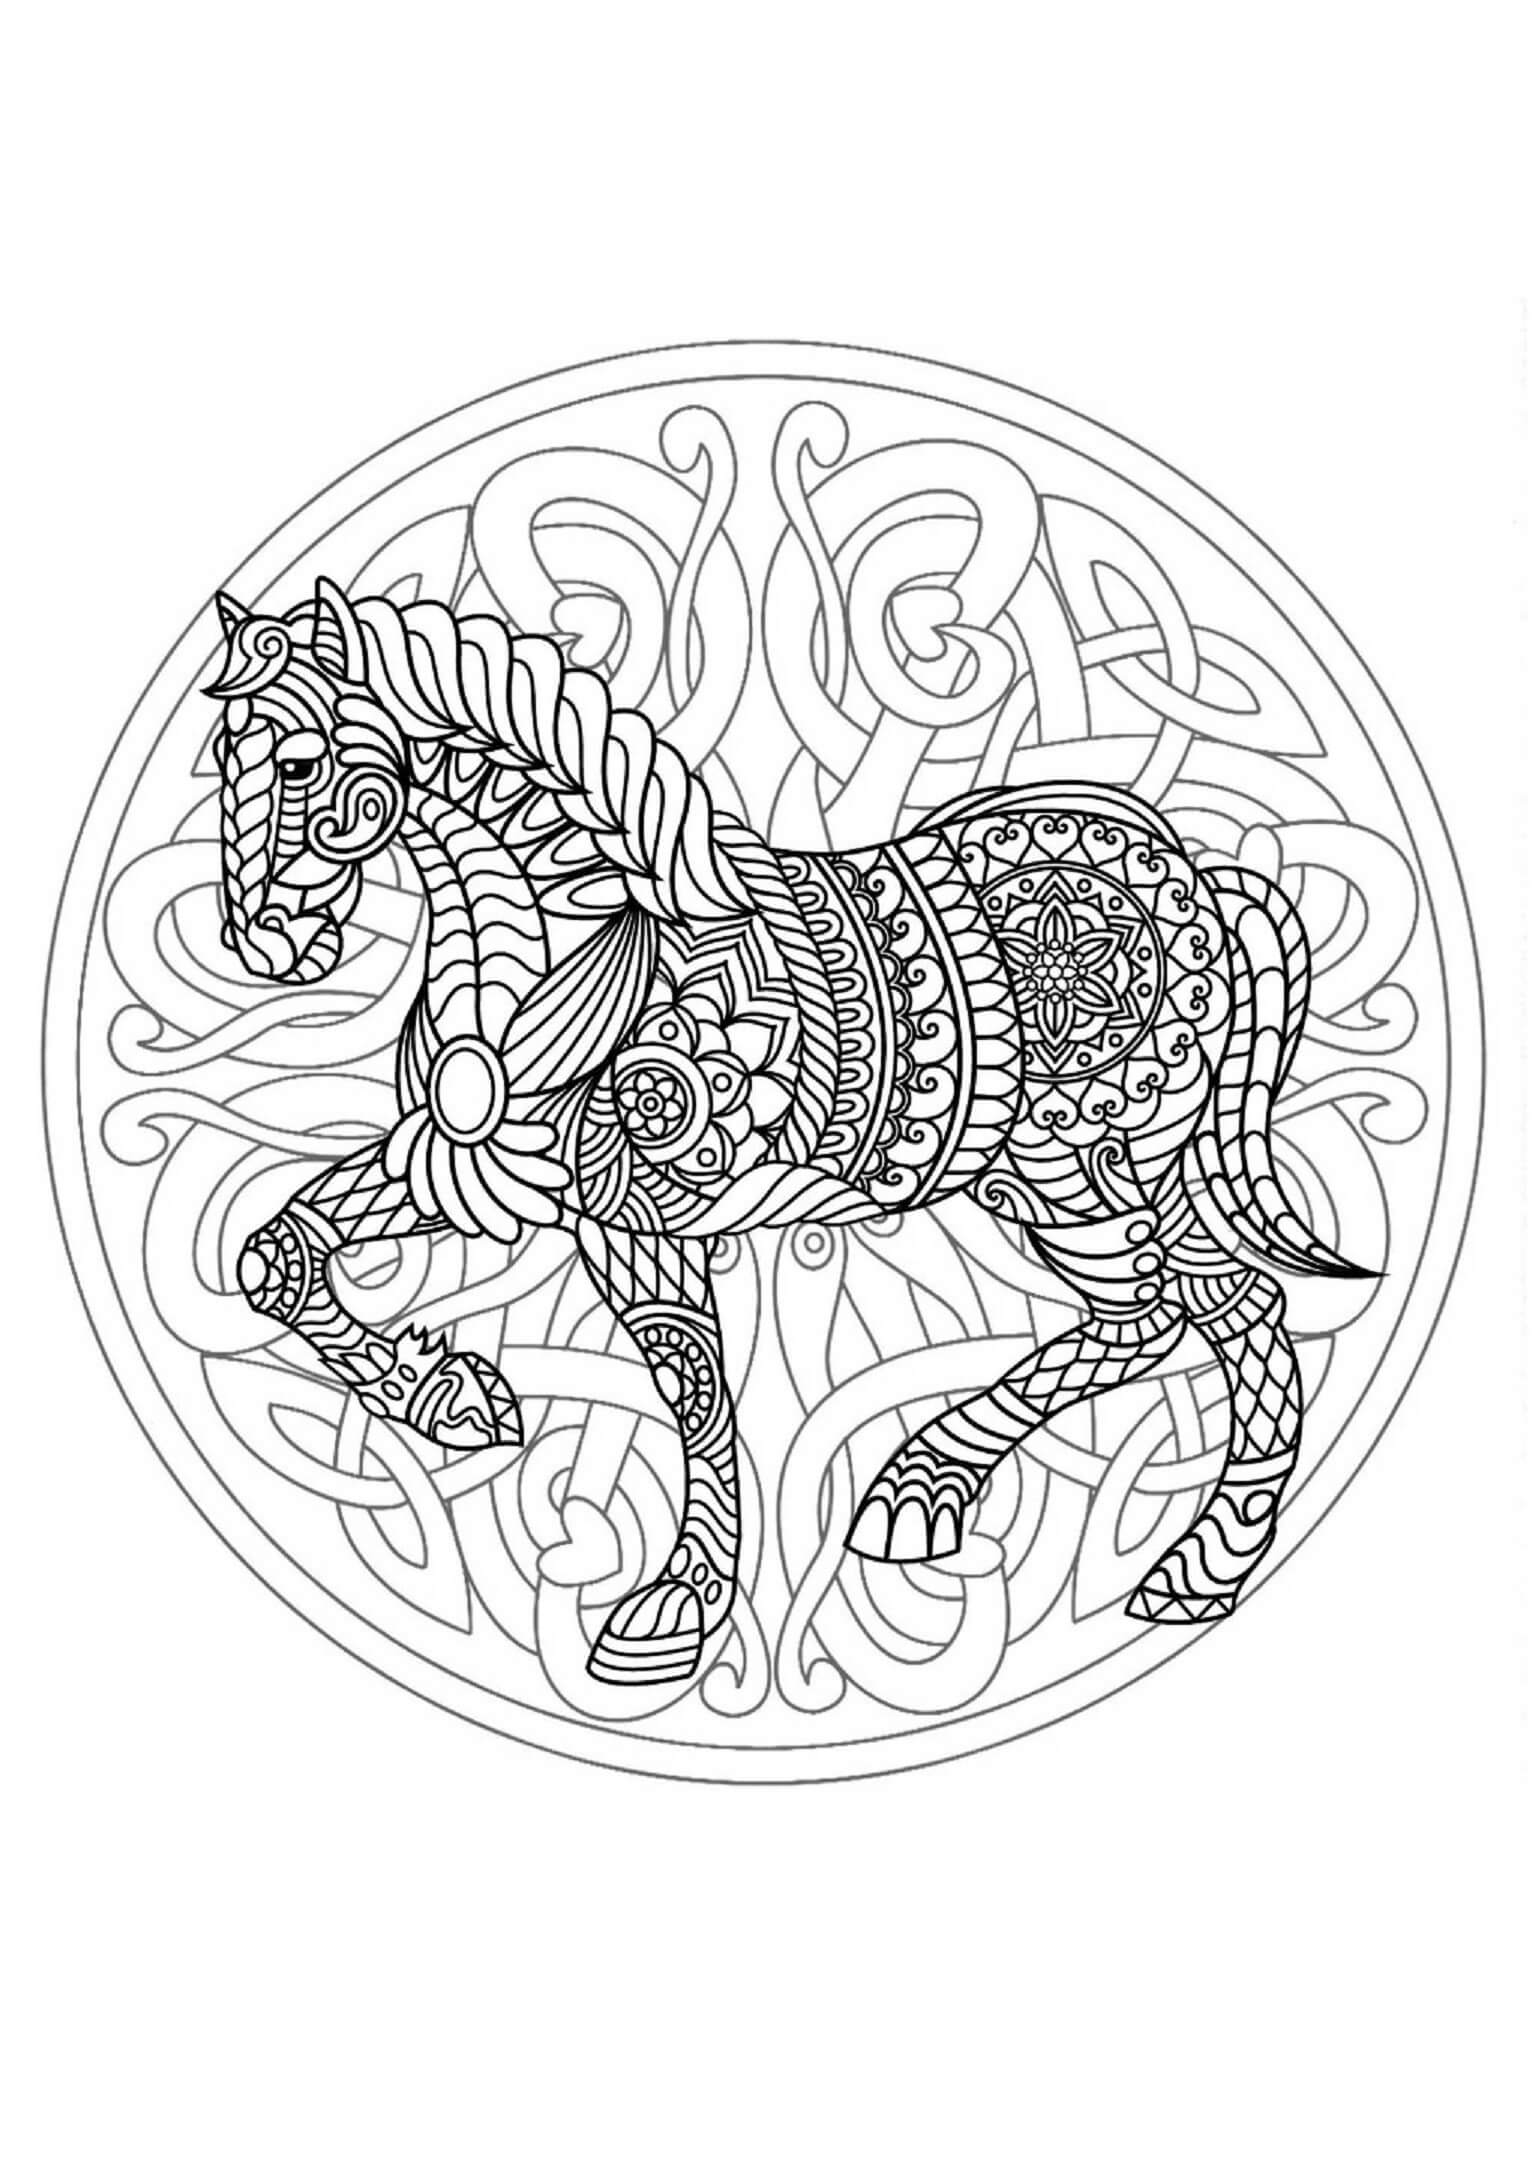 Mandala Horse Coloring Page - Sheet 1 Mandalas